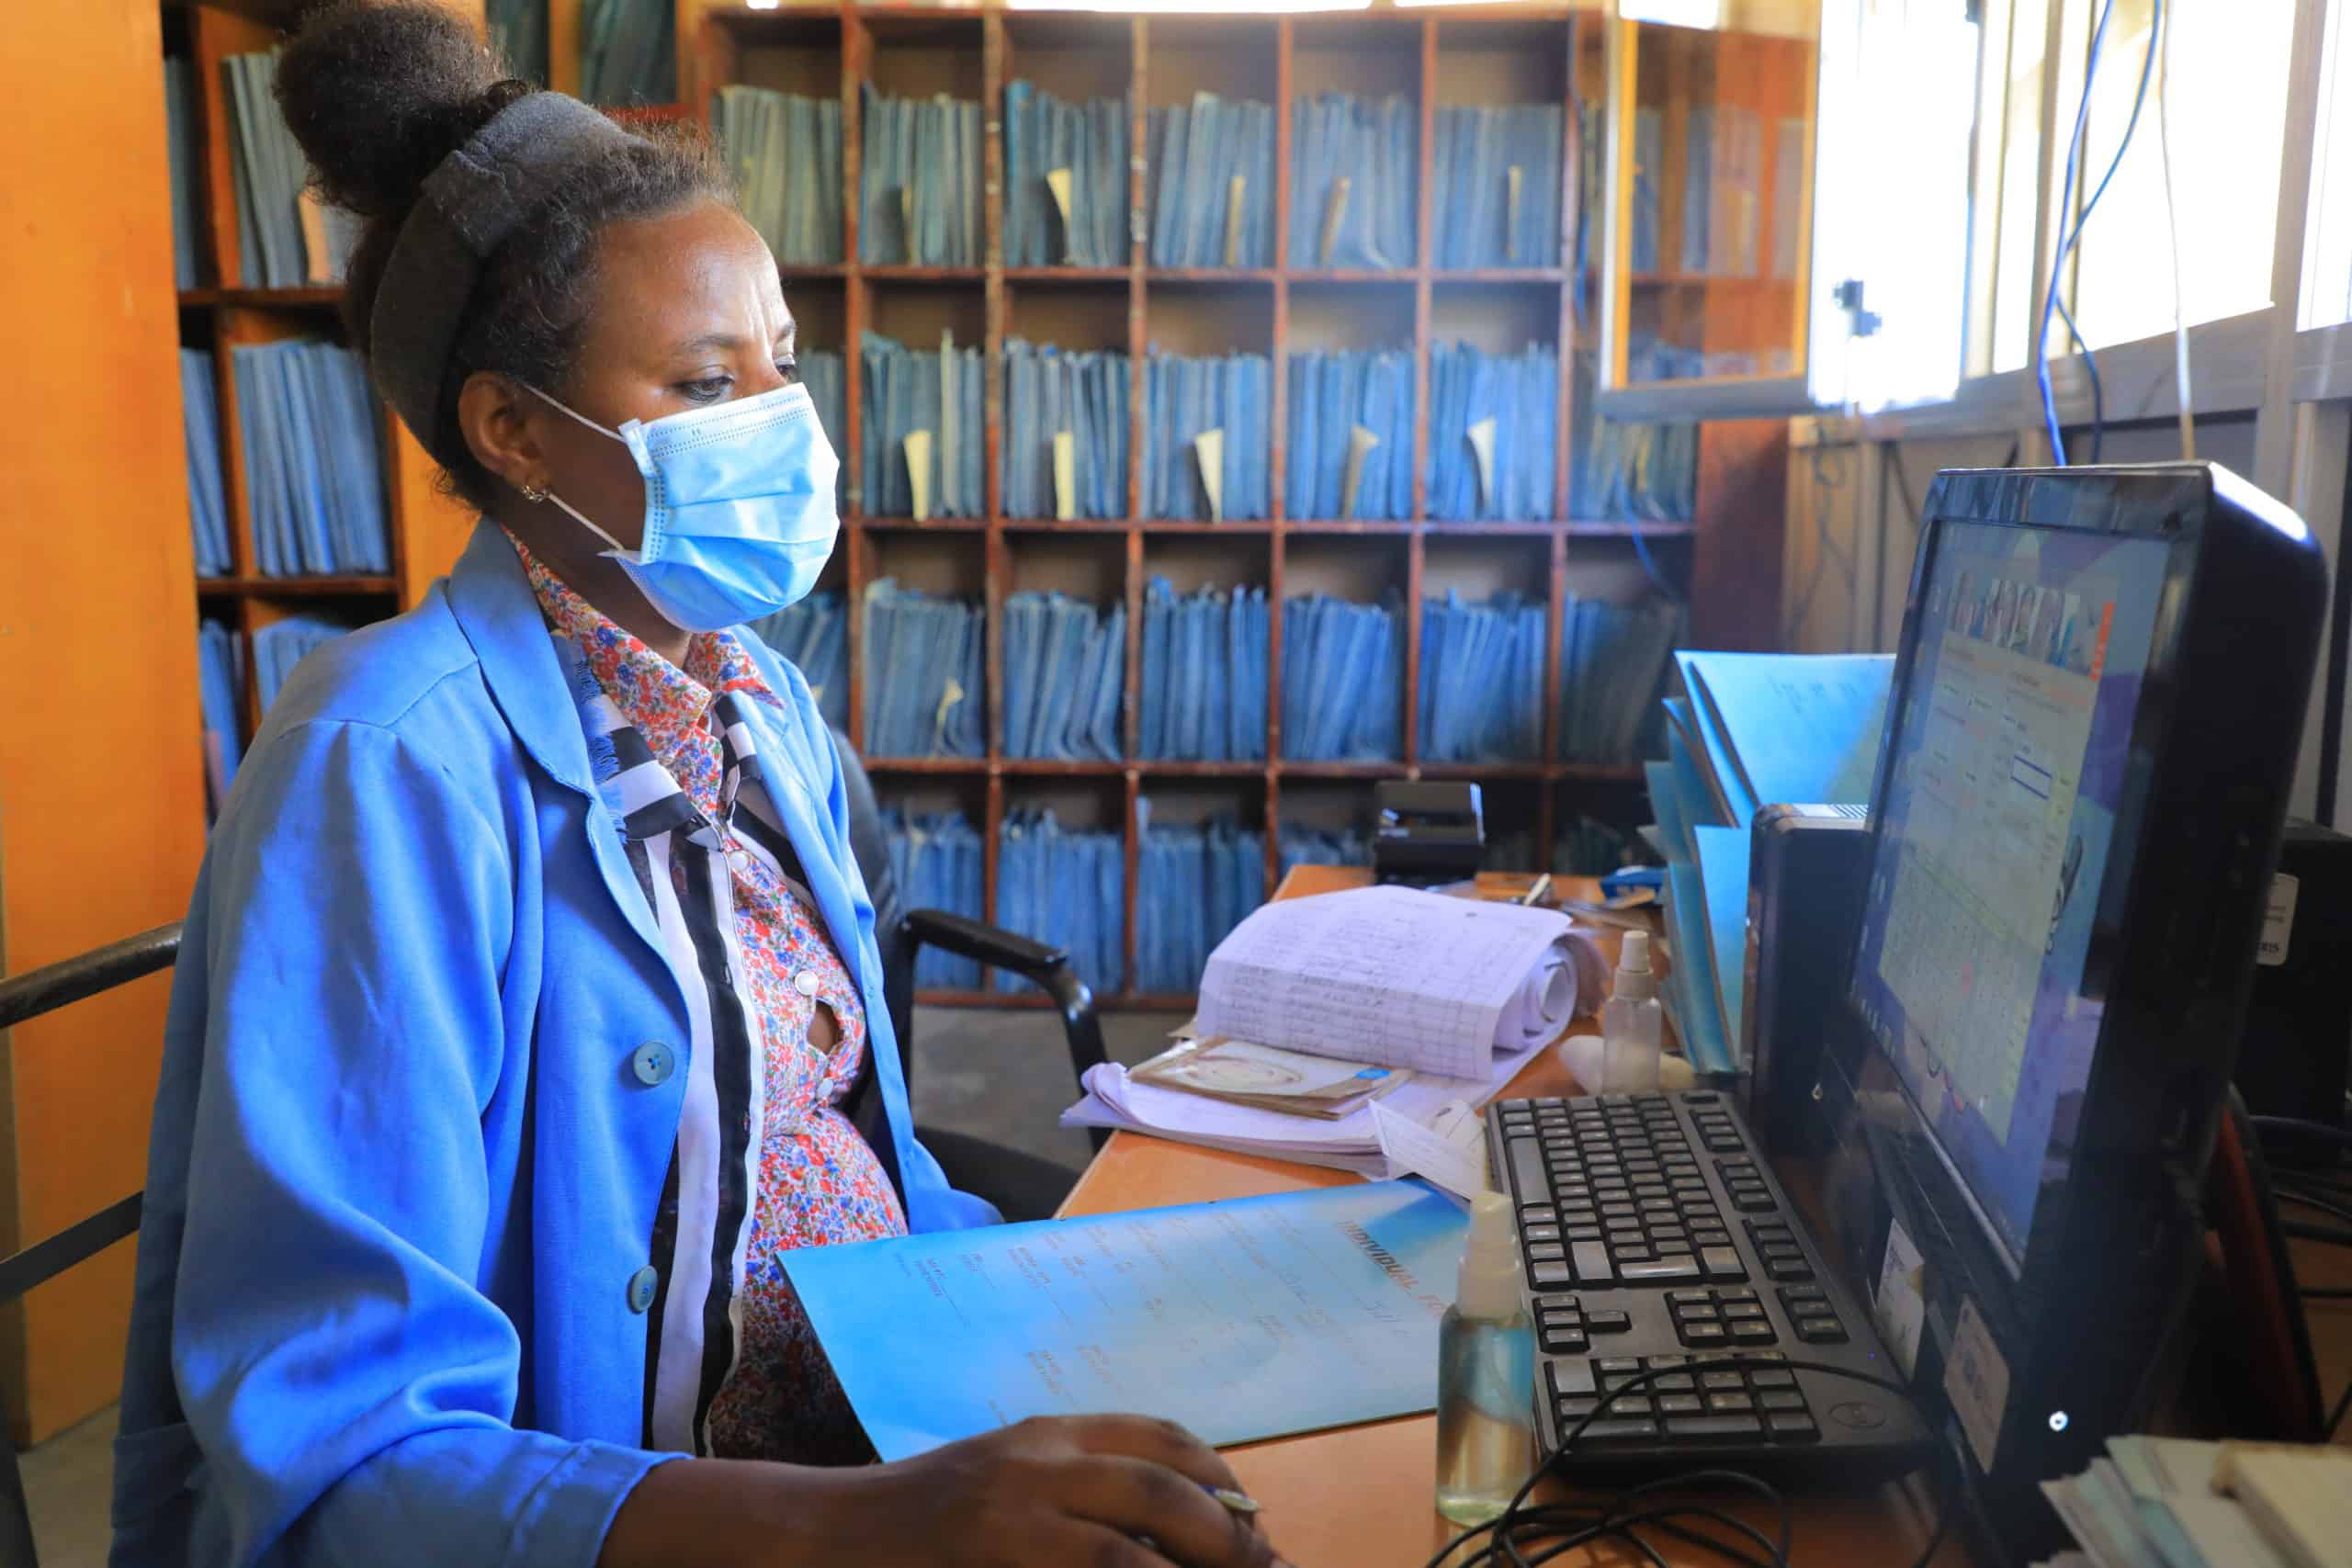 Incentivizing Improved Use of Health Information at the Harari Regional Health Bureau